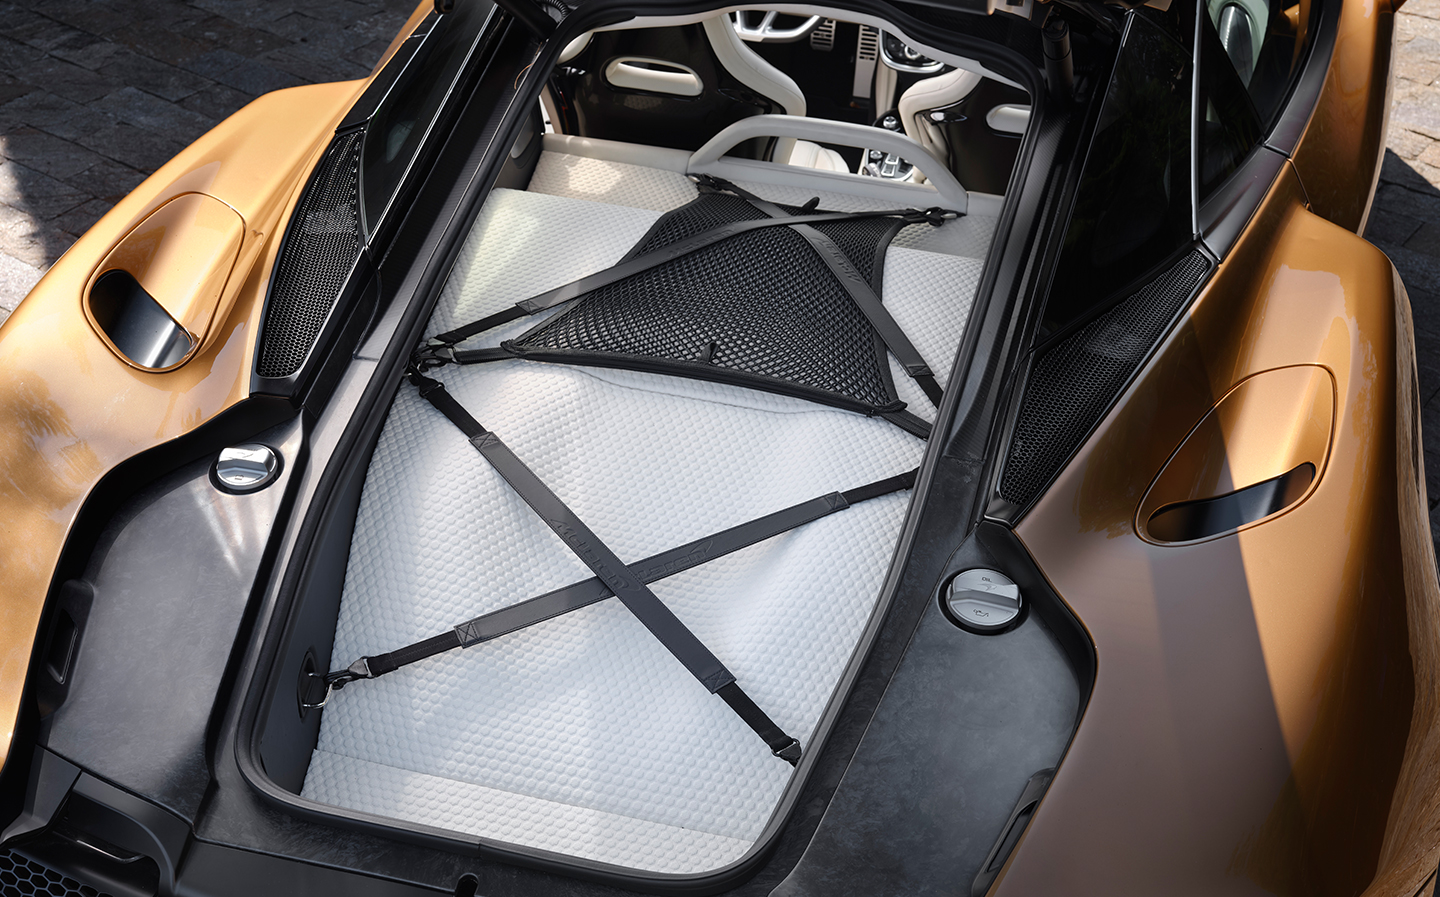 2019 McLaren GT review - rear load space